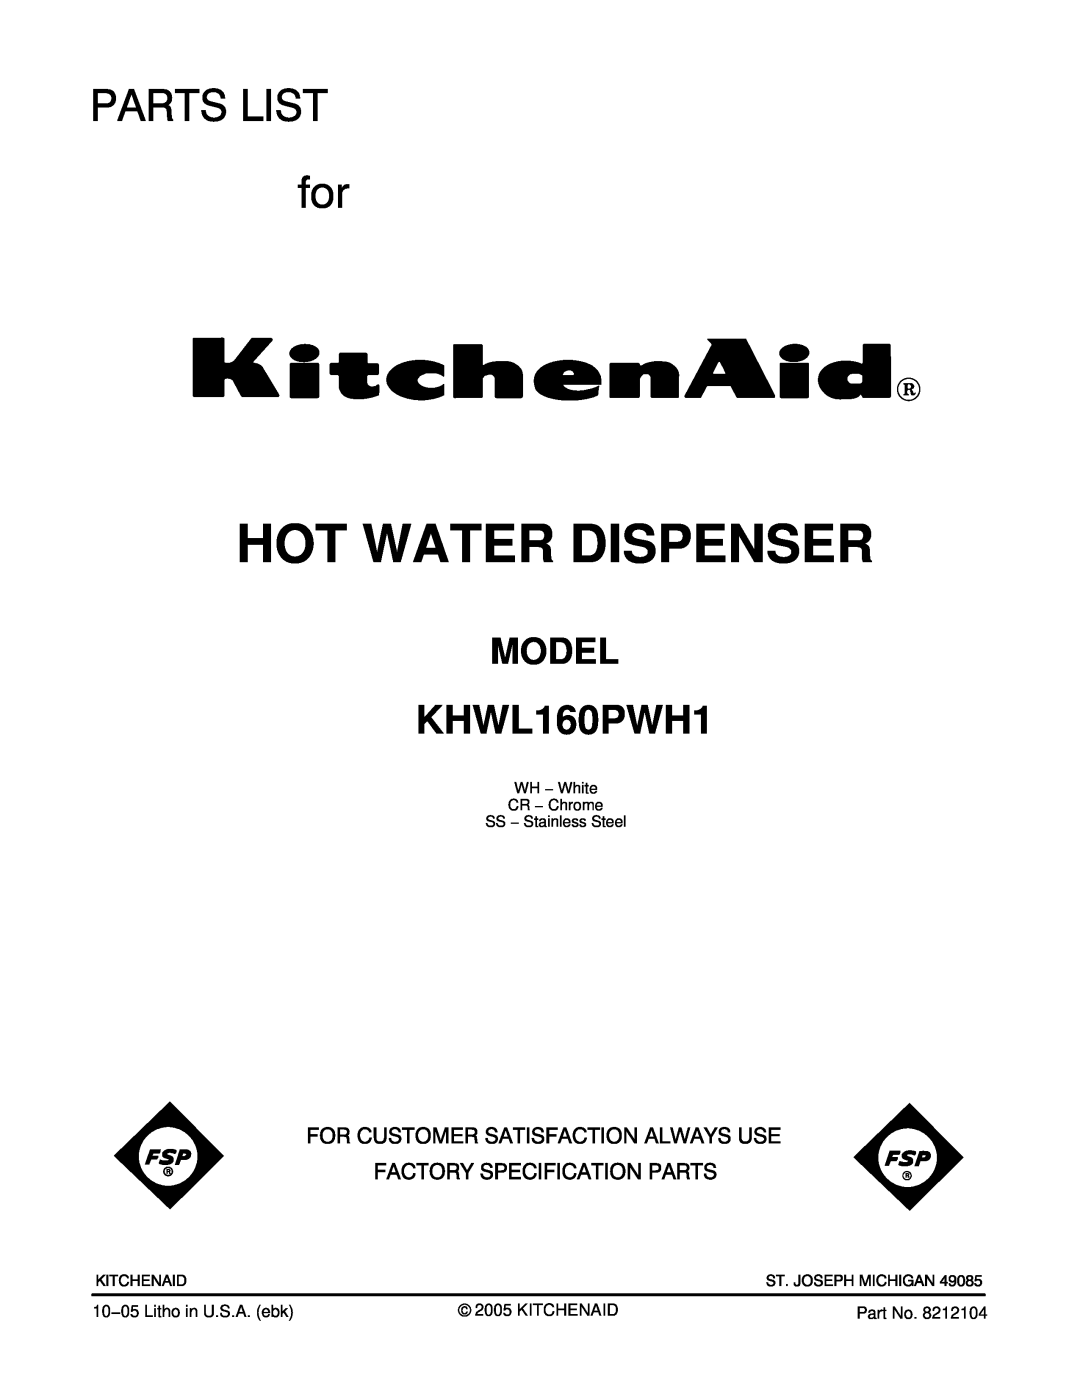 KitchenAid KHWL160PCR manual Hot Water Dispenser, KHWL160PWH1, Model, WH − White CR − Chrome SS − Stainless Steel 